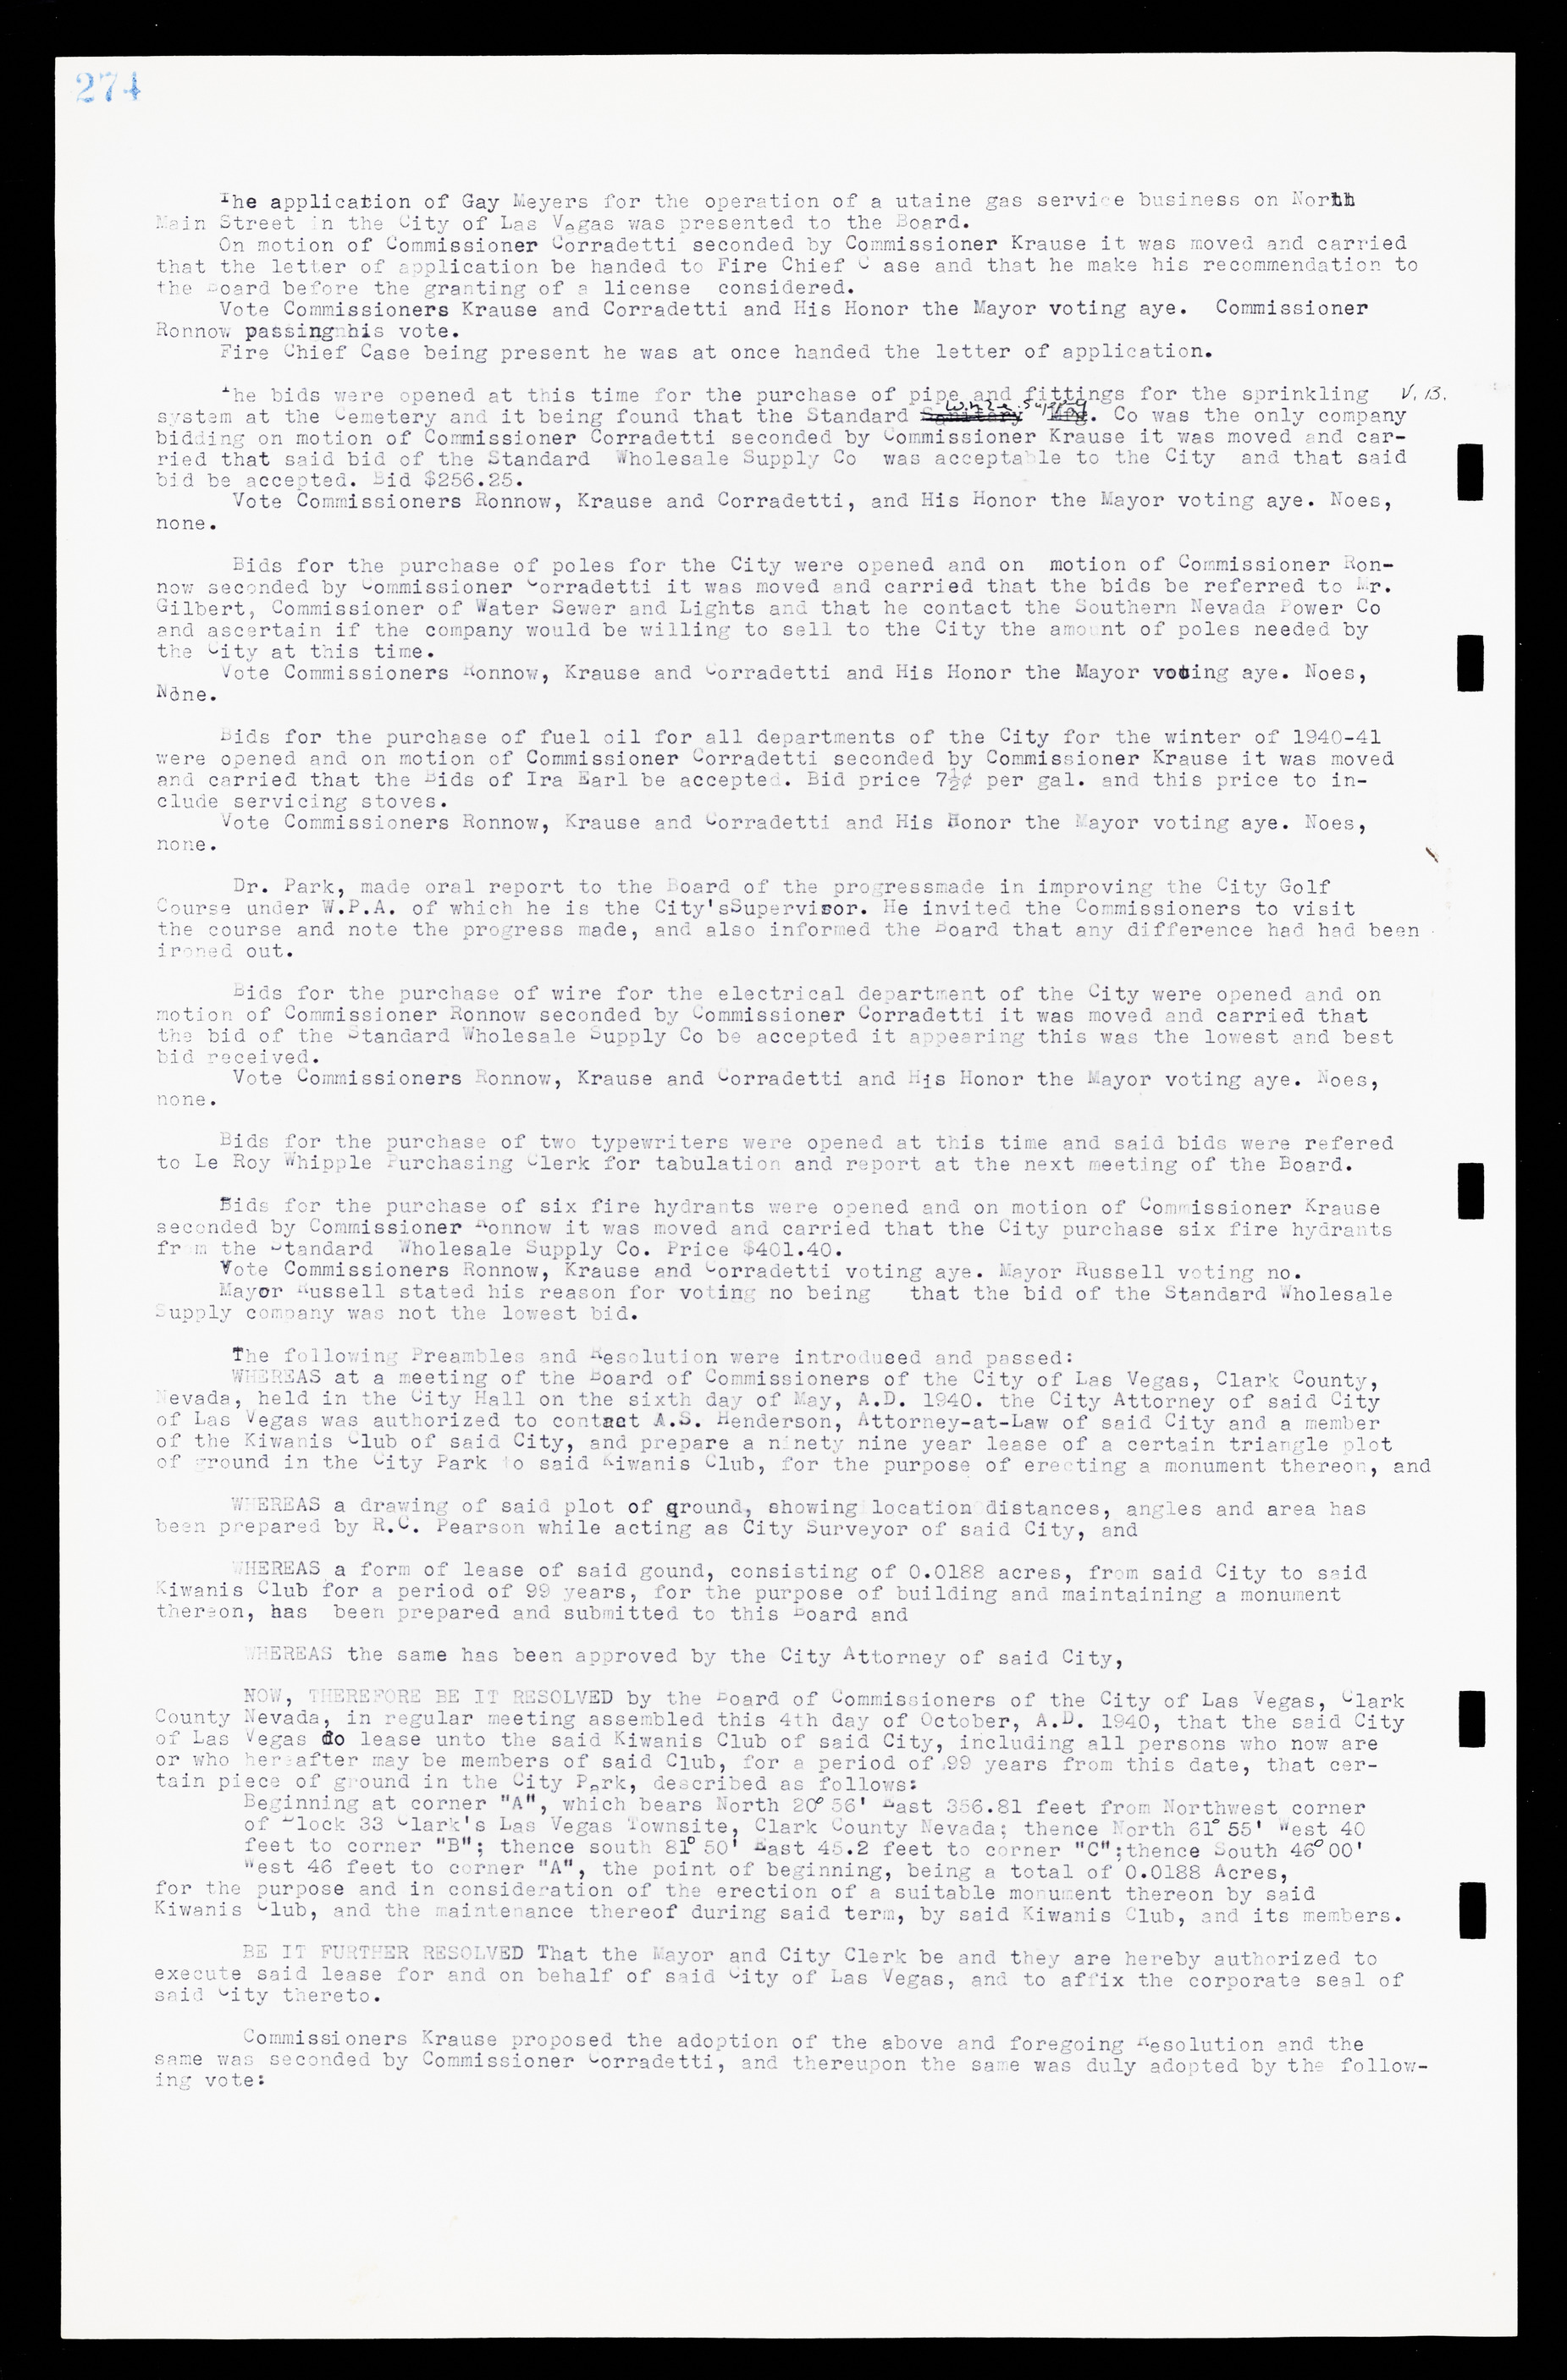 Las Vegas City Commission Minutes, February 17, 1937 to August 4, 1942, lvc000004-296